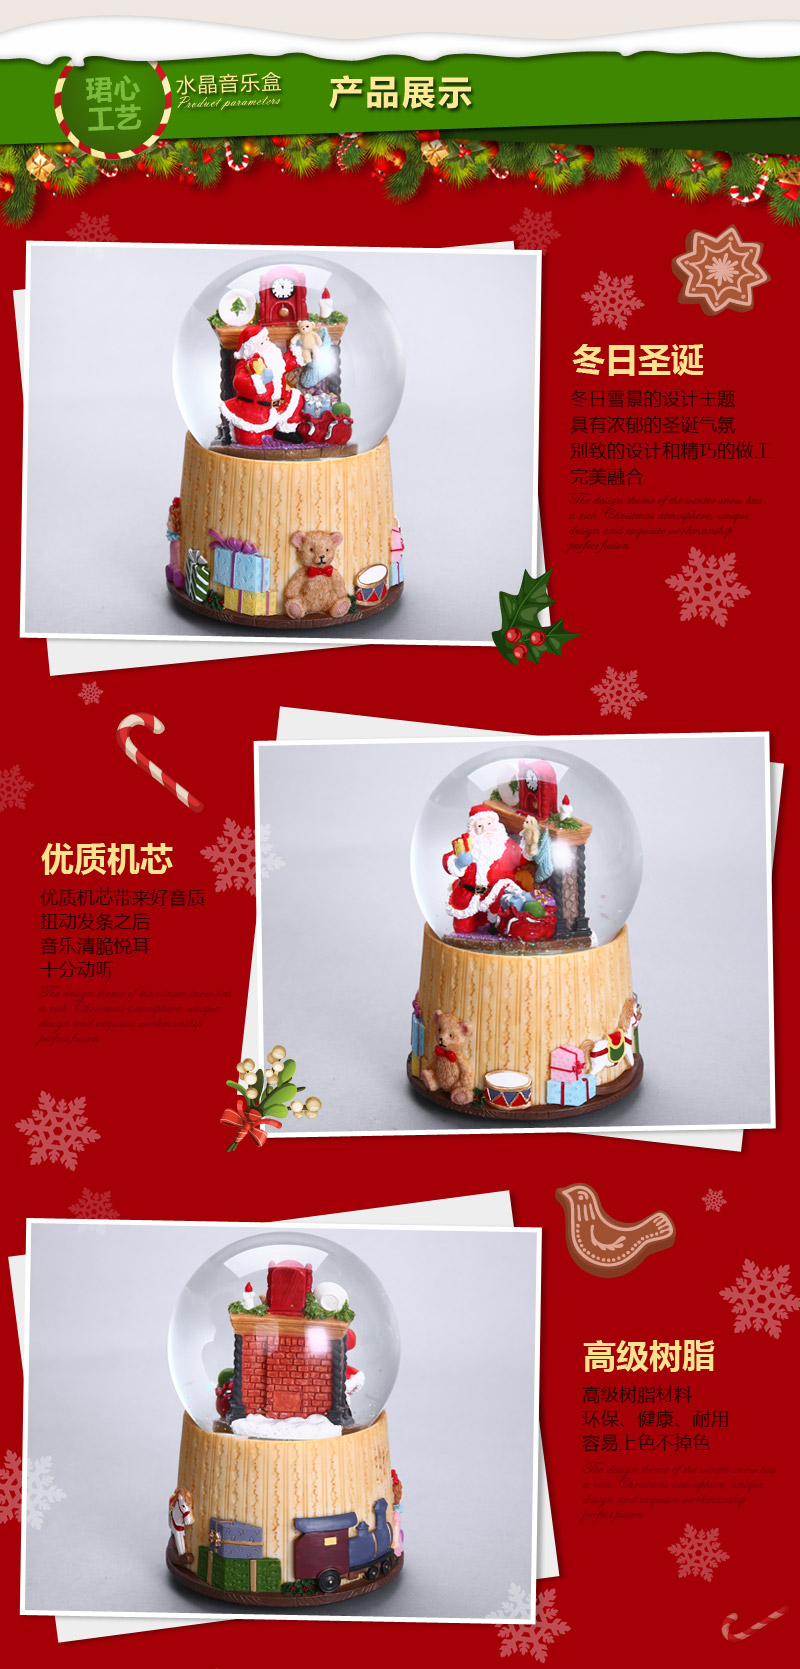 Creative music box resin Santa Claus crystal ball Christmas gift birthday gift exclusive custom (seven days) MG-589 resin decoration3